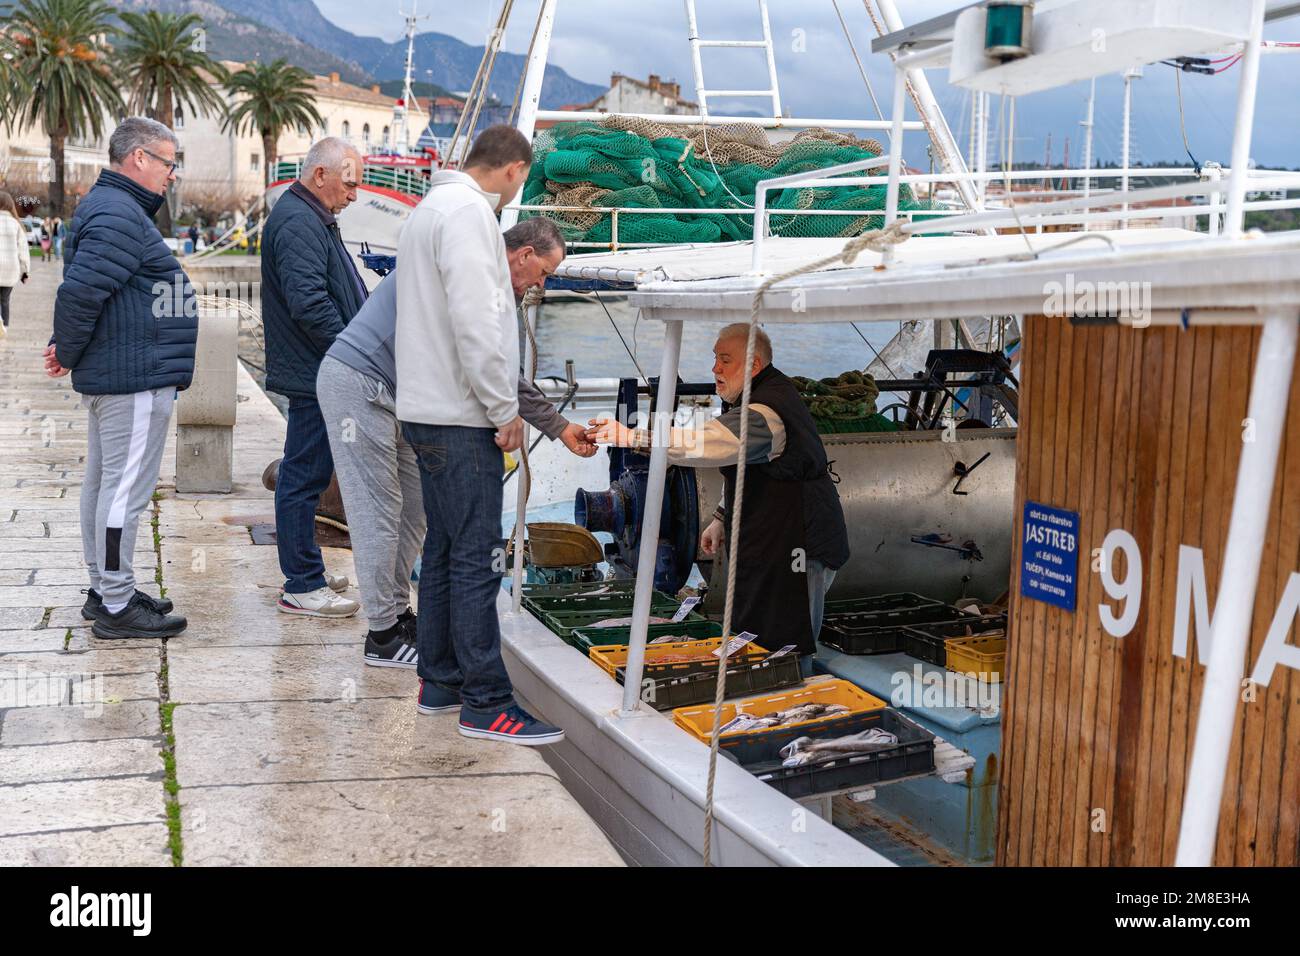 The fishmarket on Makarska embankment. Fishboat and fish. Stock Photo